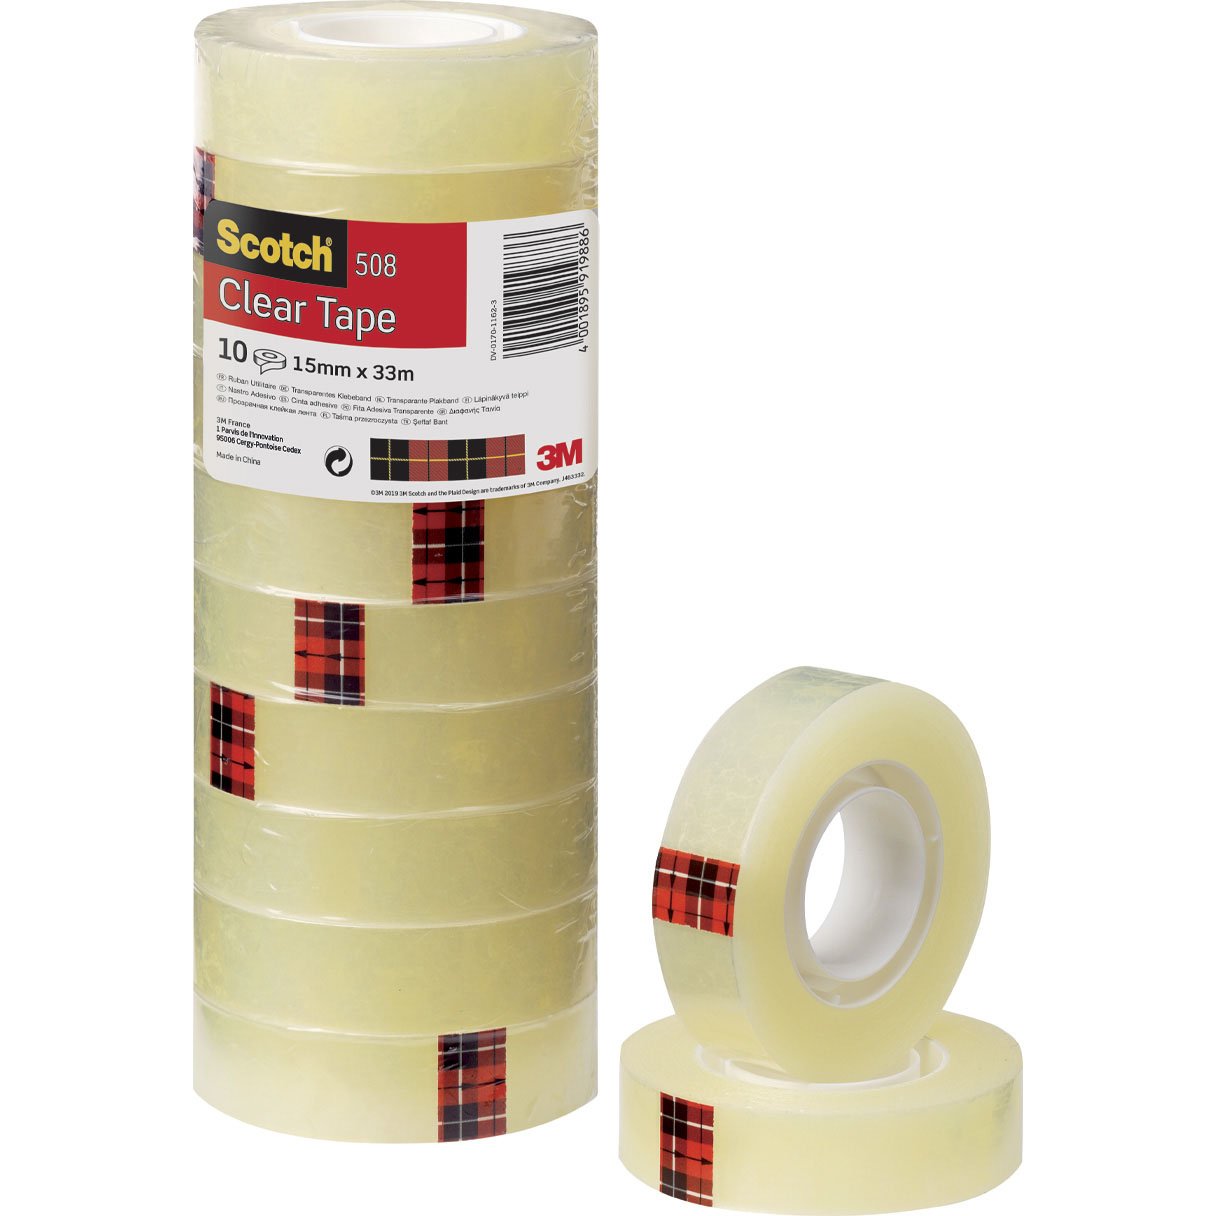 Scotch allround tape